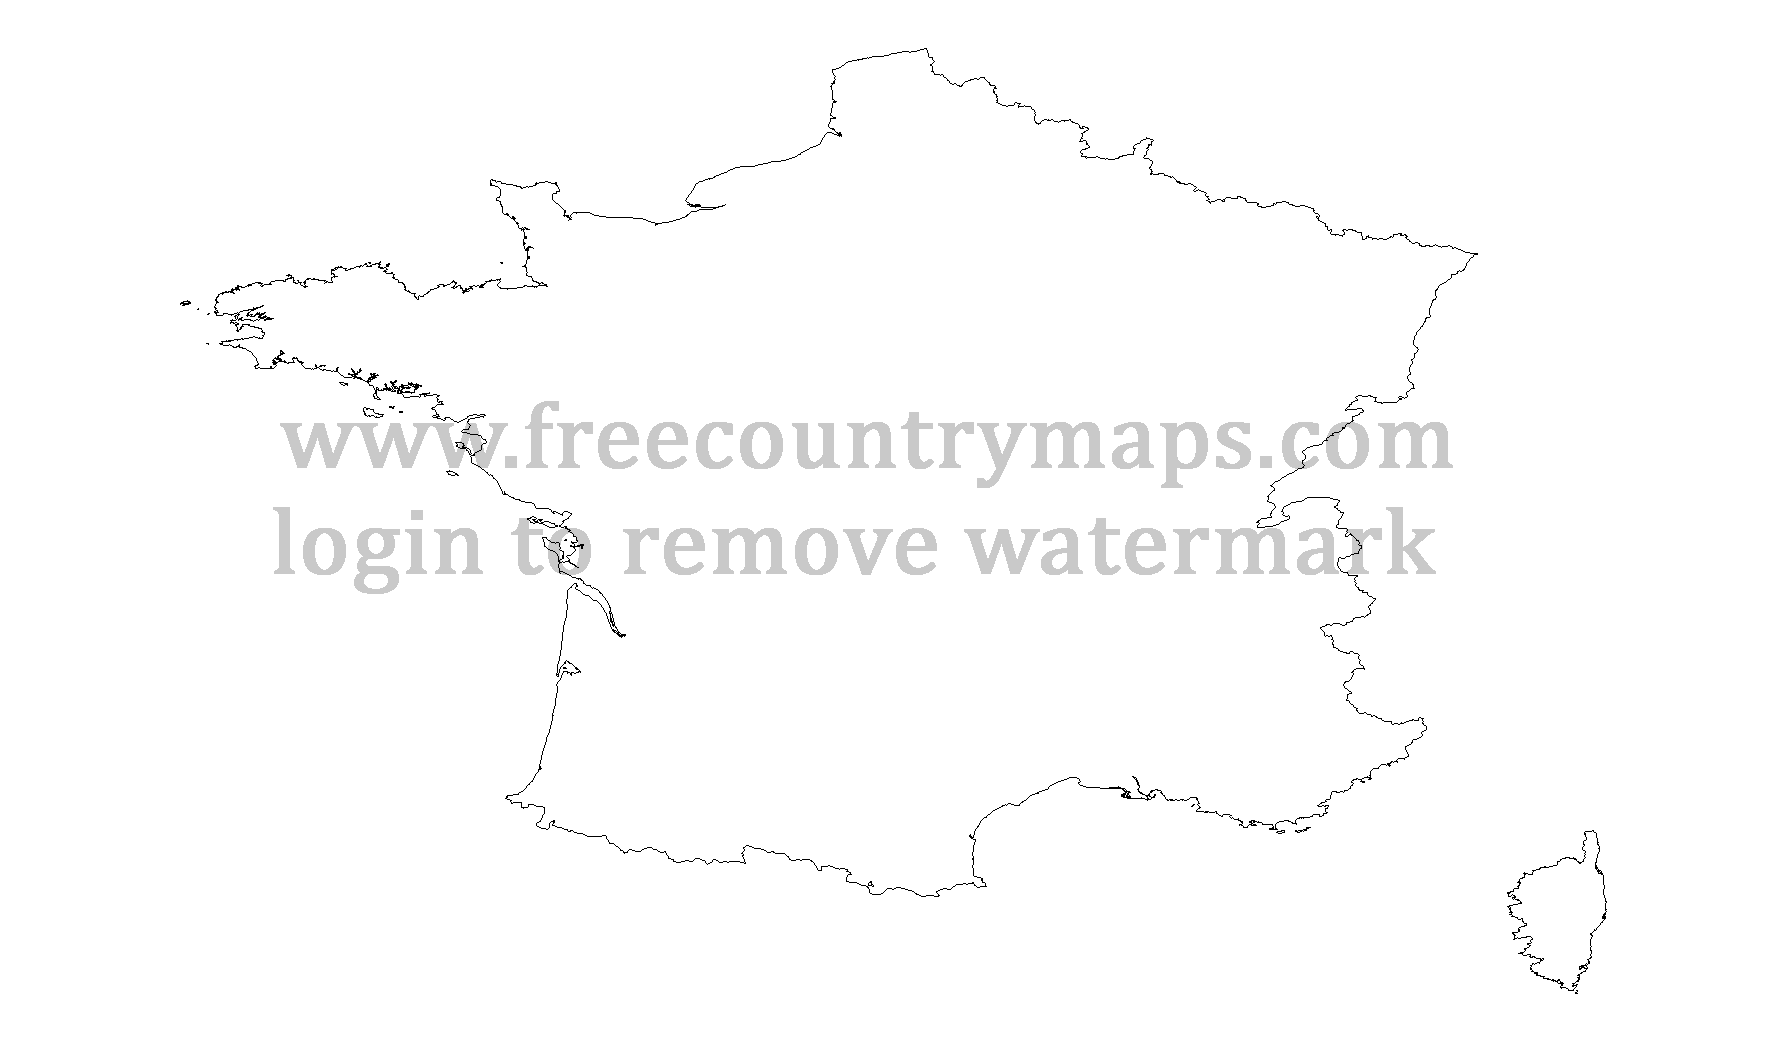 Outline Map of France